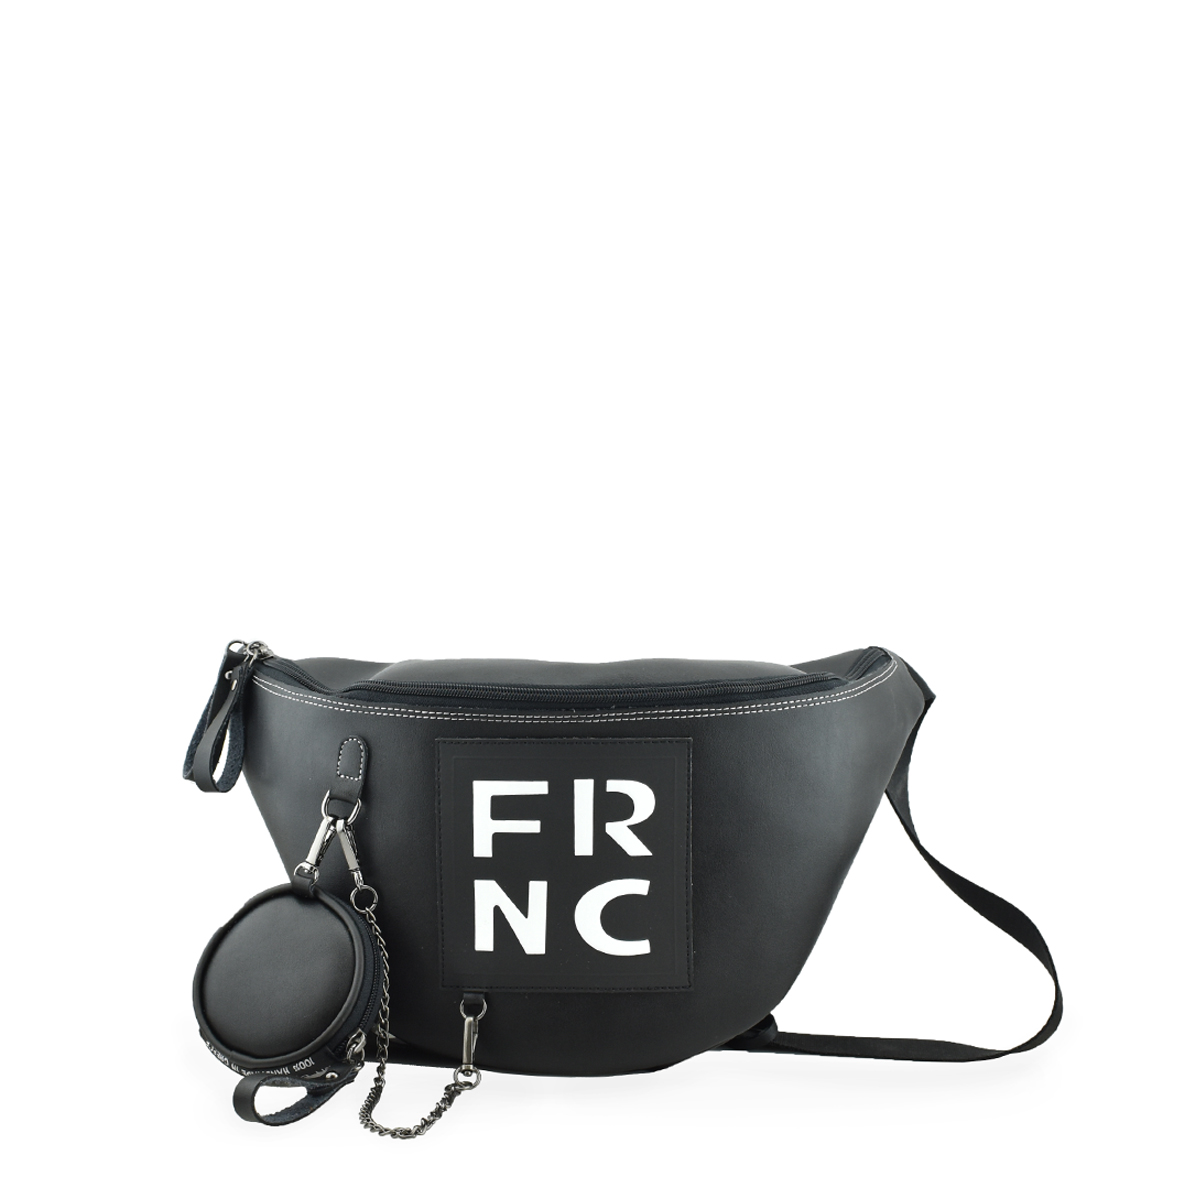 FRNC - FRANCESCO BIG BUMBAG - 1670 BLACK